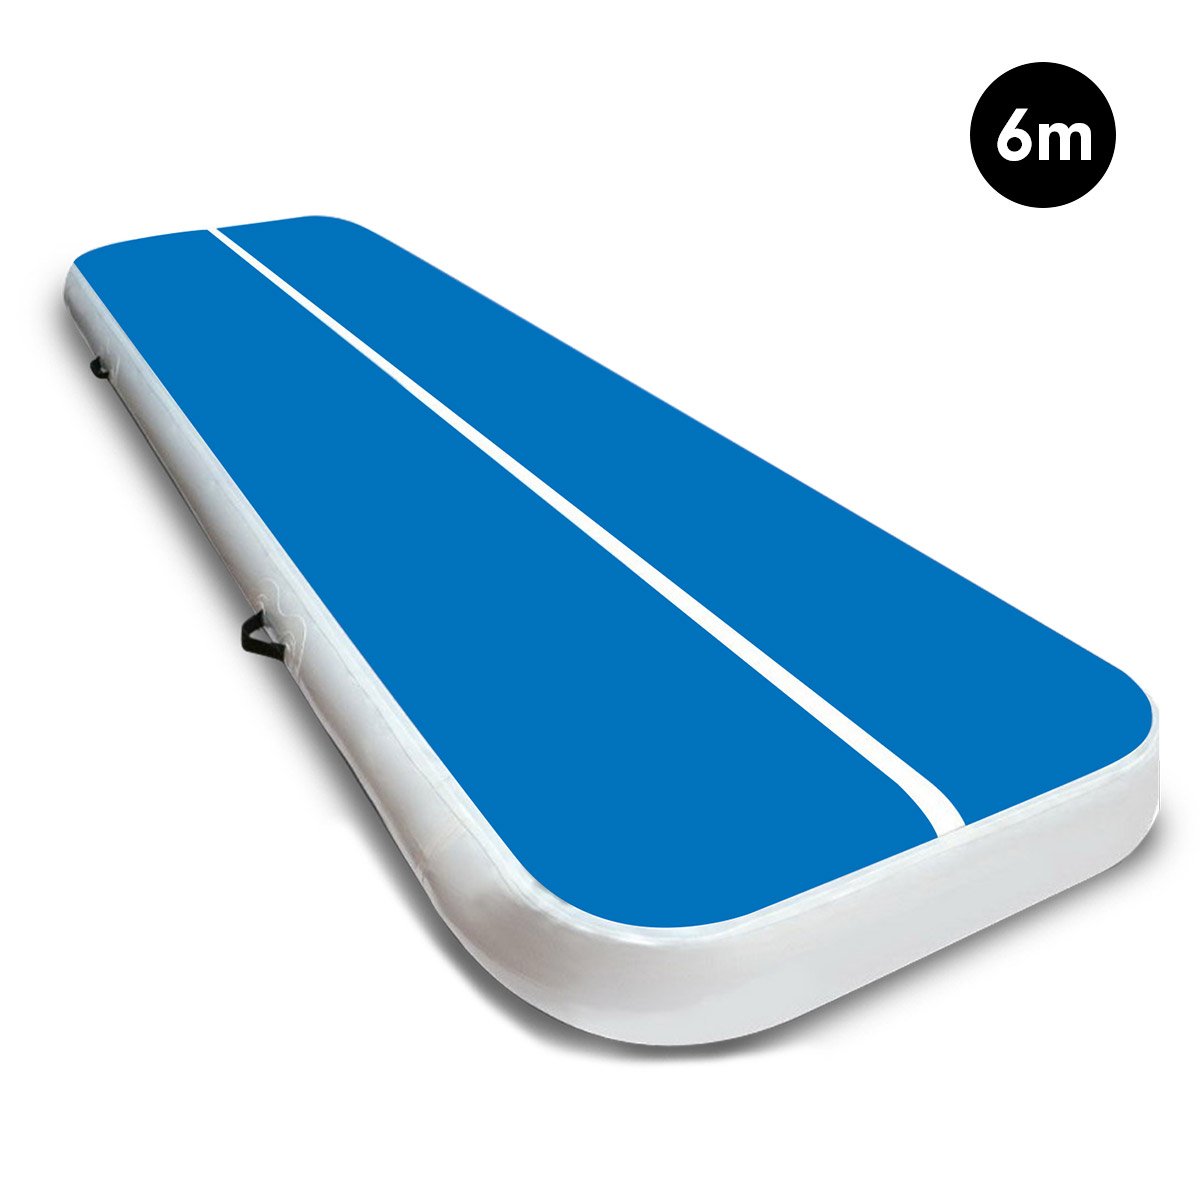 6m x 2m Air Track Gymnastics Mat Tumbling Exercise - Blue White 1